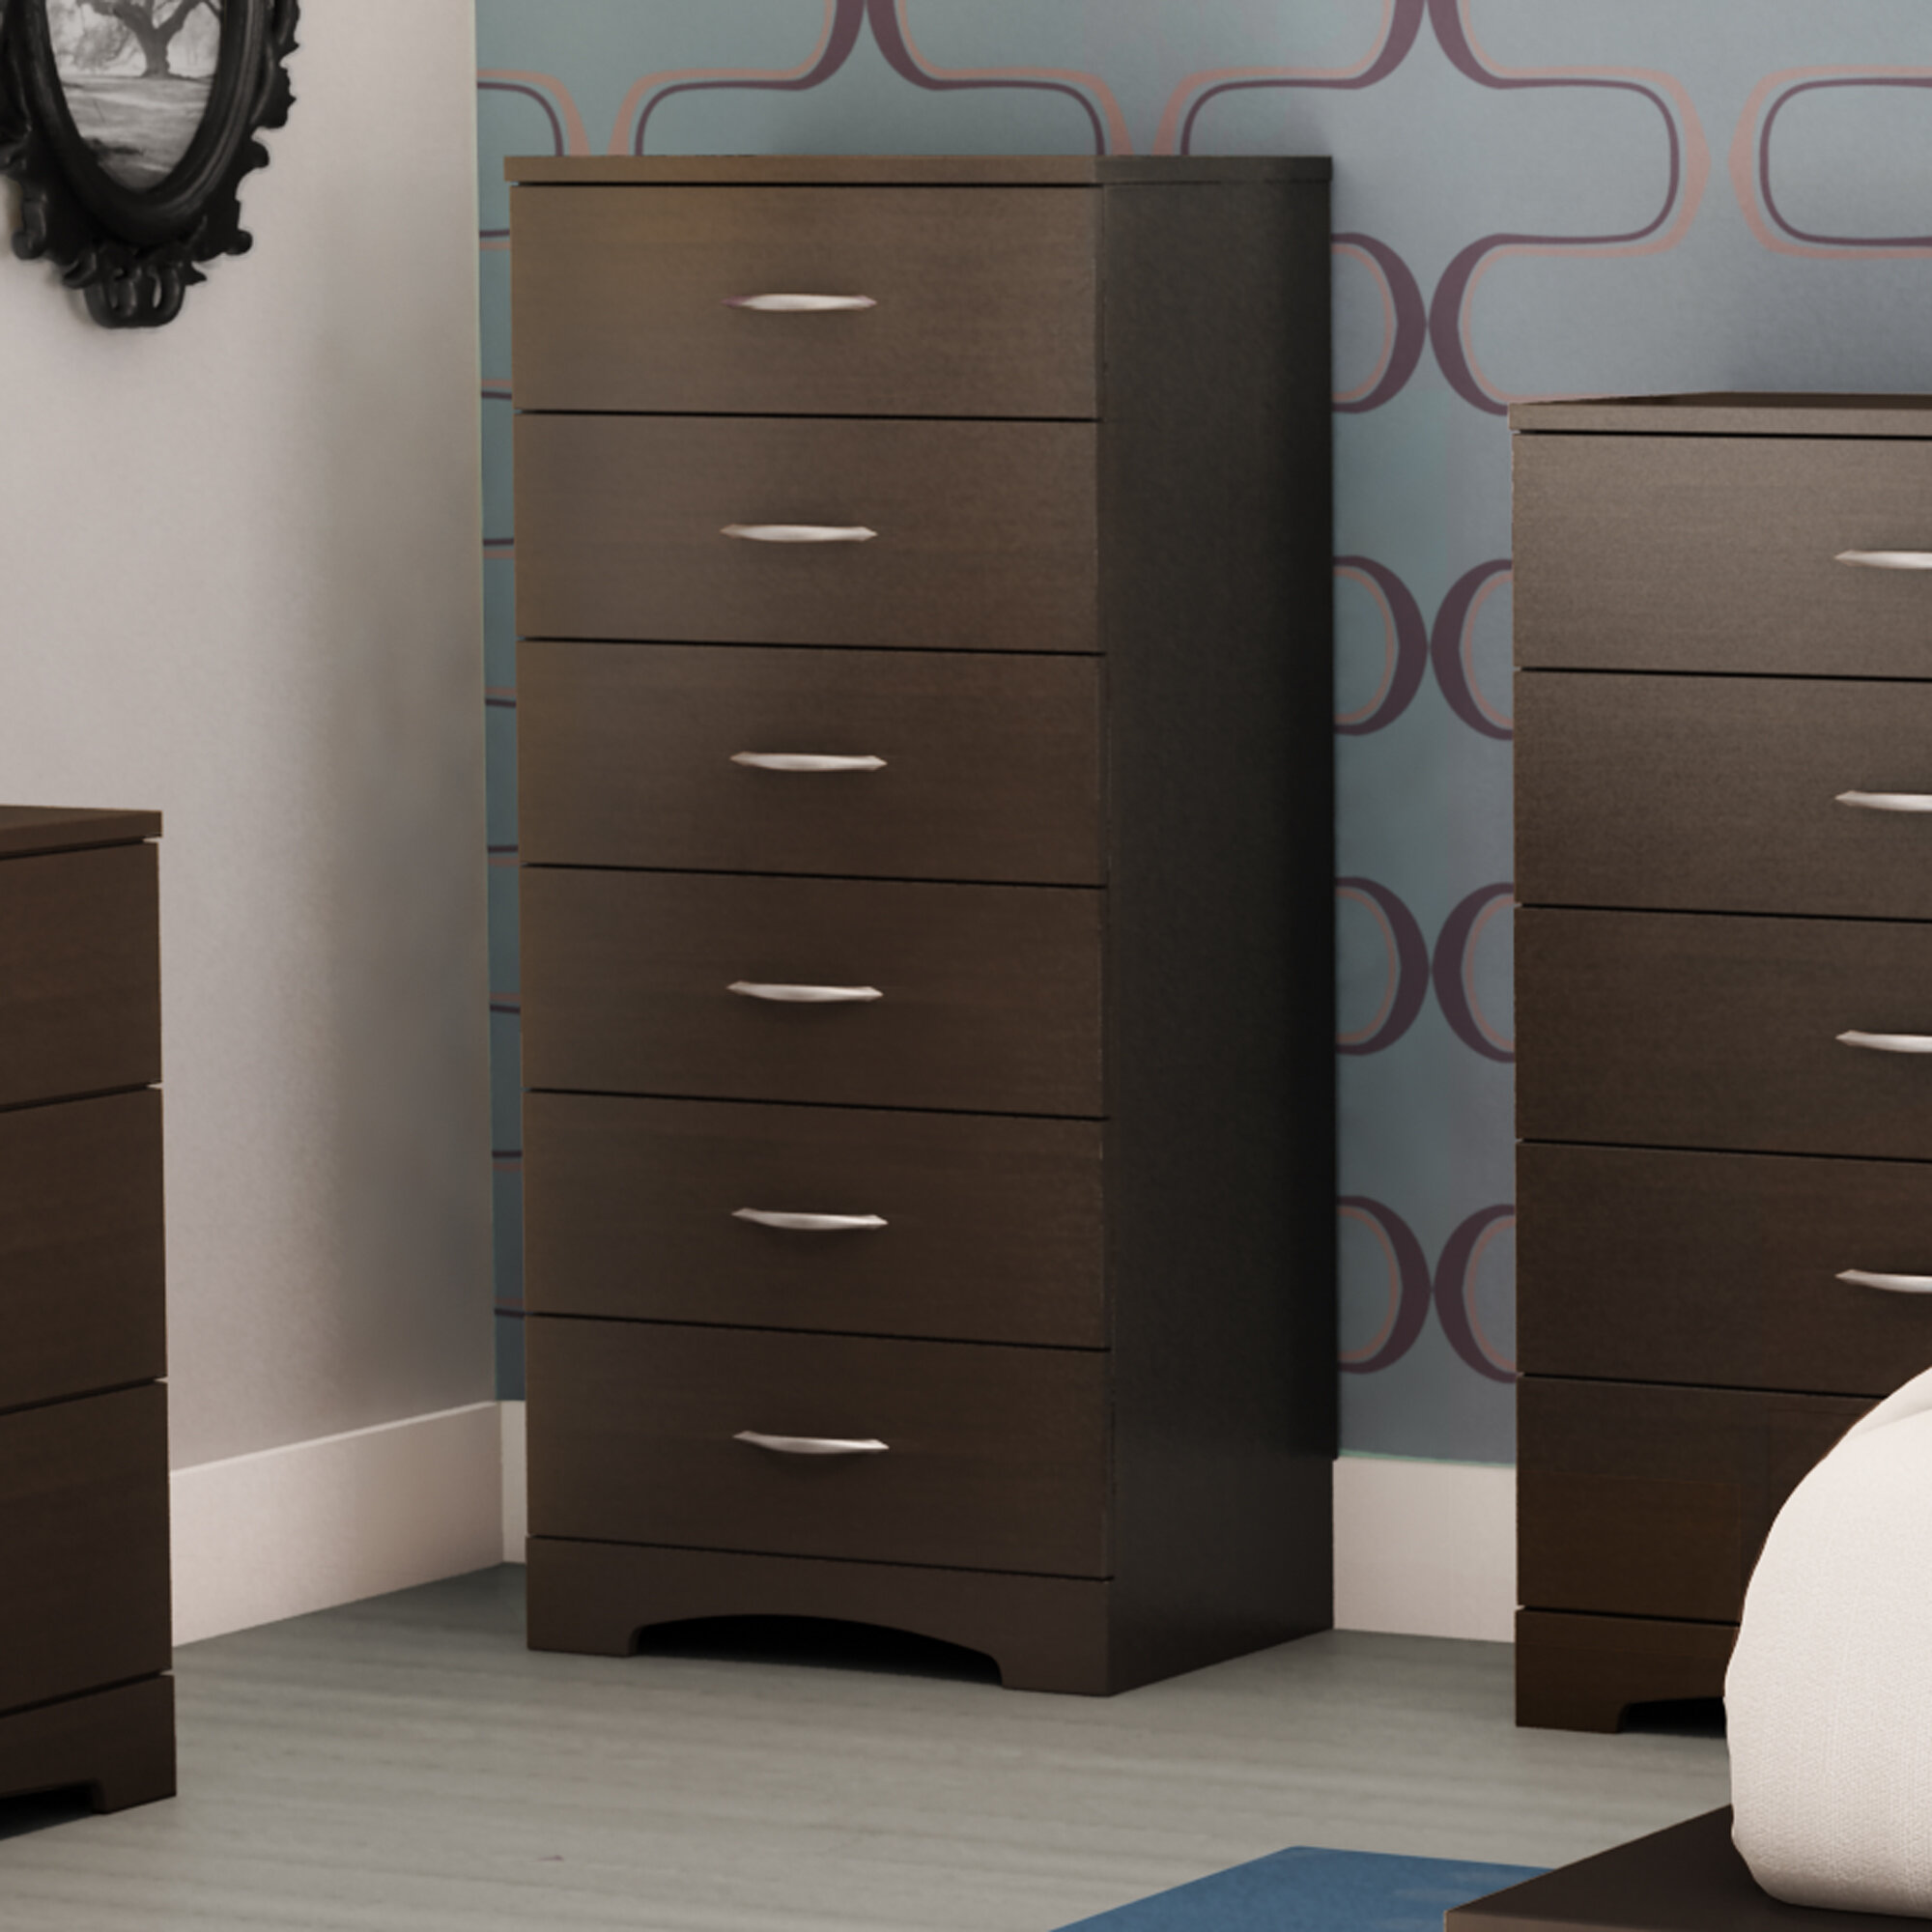 Details about   Dark Brown Wooden 6 Drawer Tall Dresser Chest Drawers Clothes Storage Cabinet 